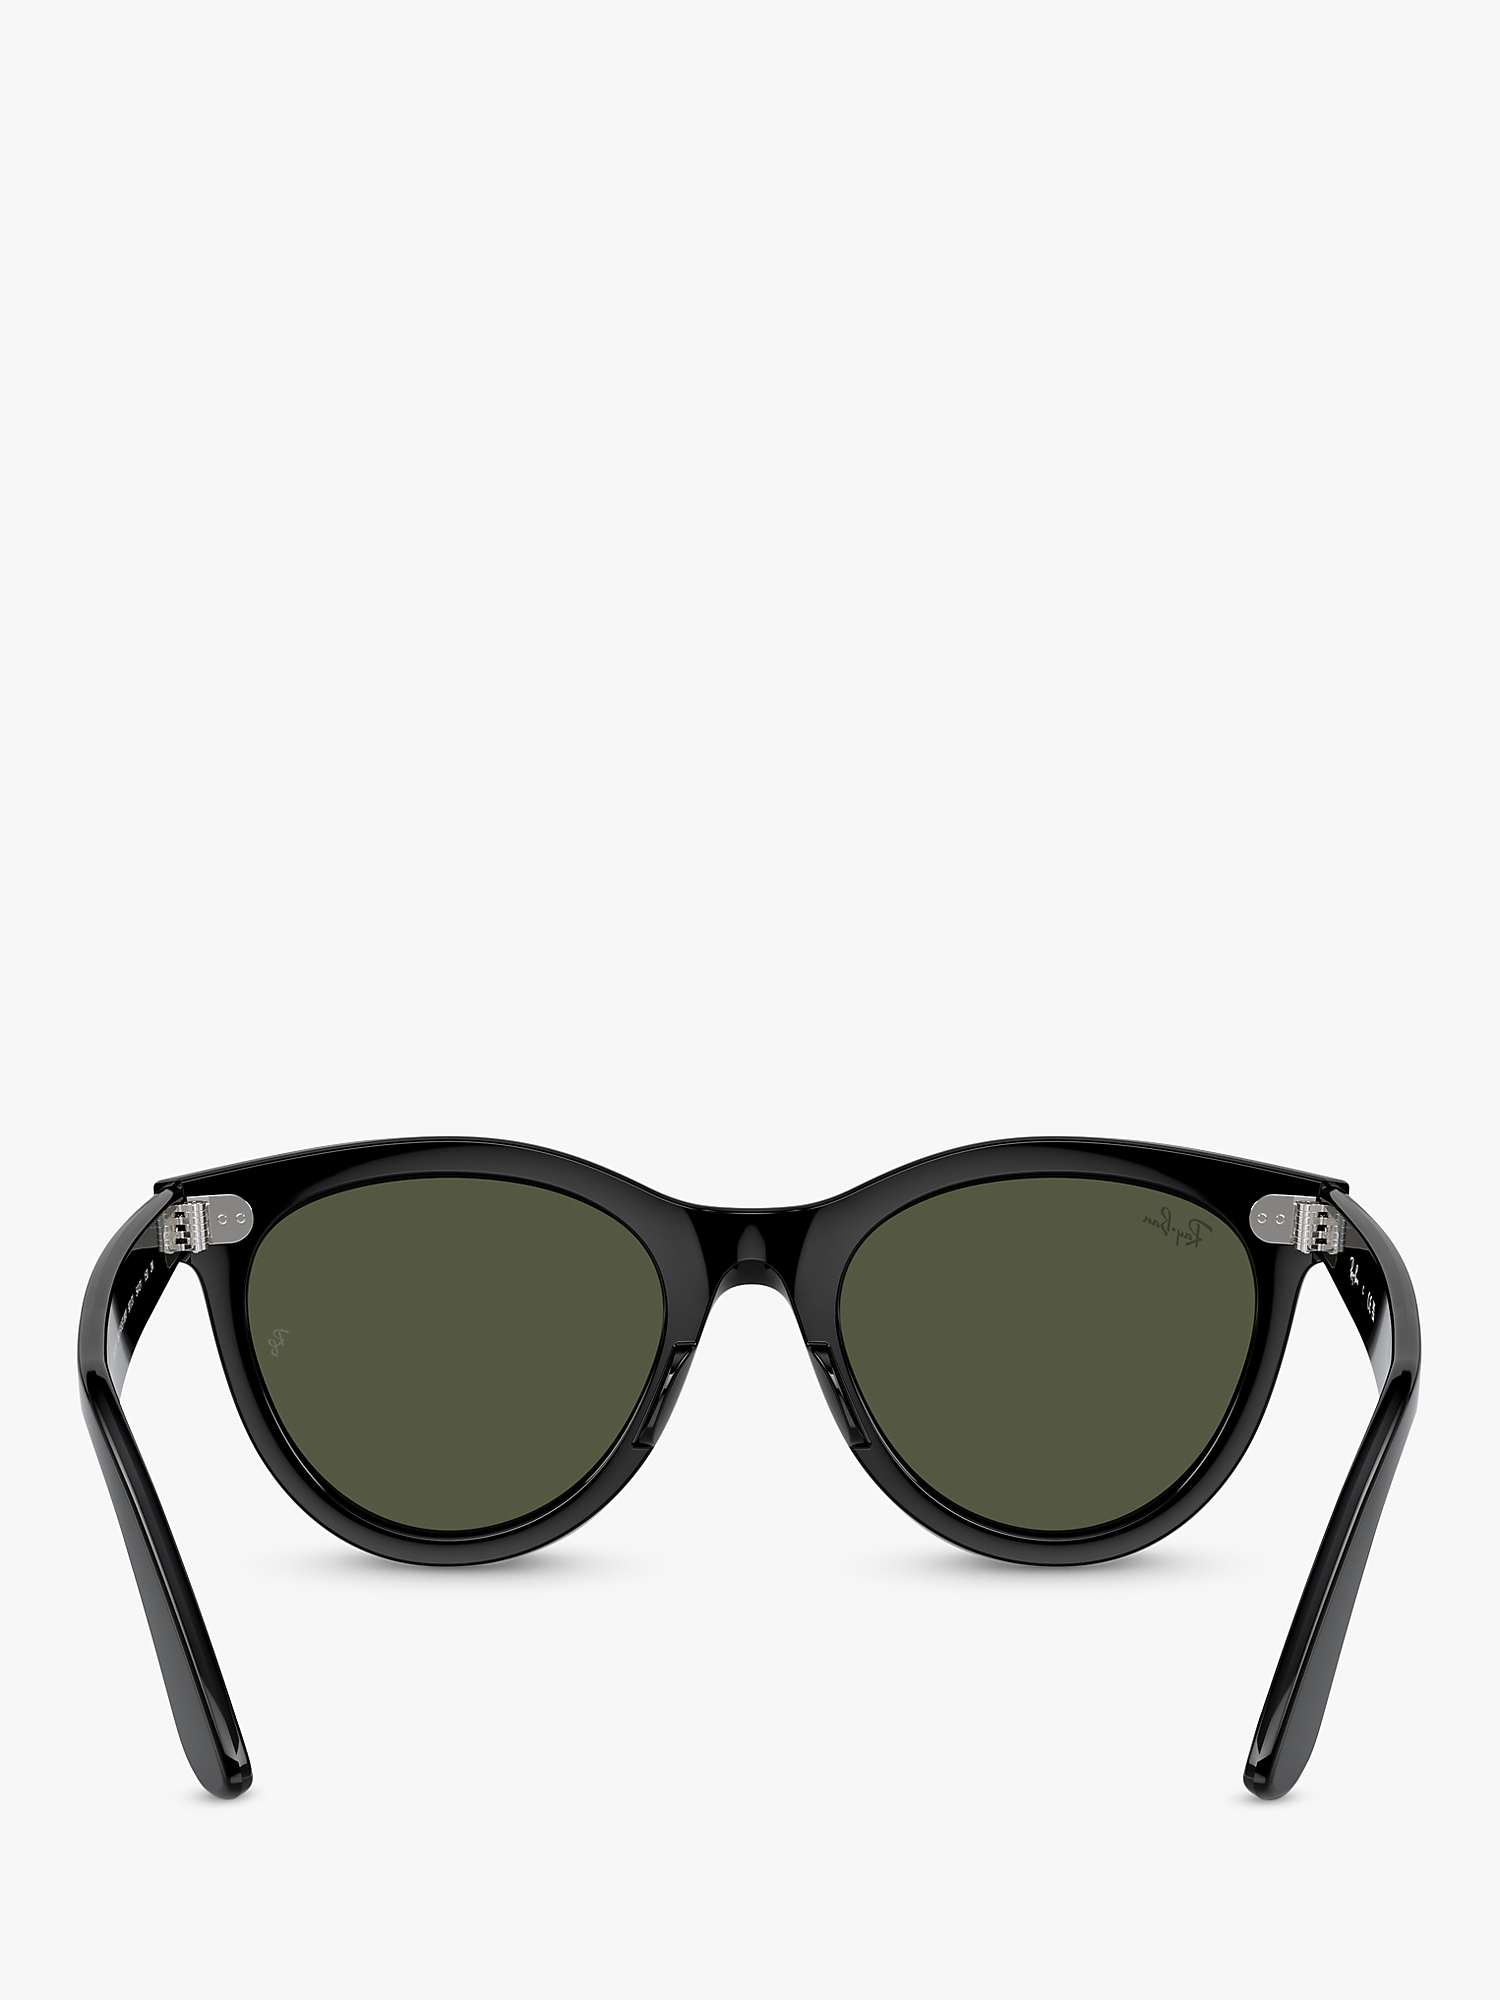 Buy Ray-Ban RB2241 Unisex Wayfarer Way Sunglasses, Black/Green Online at johnlewis.com